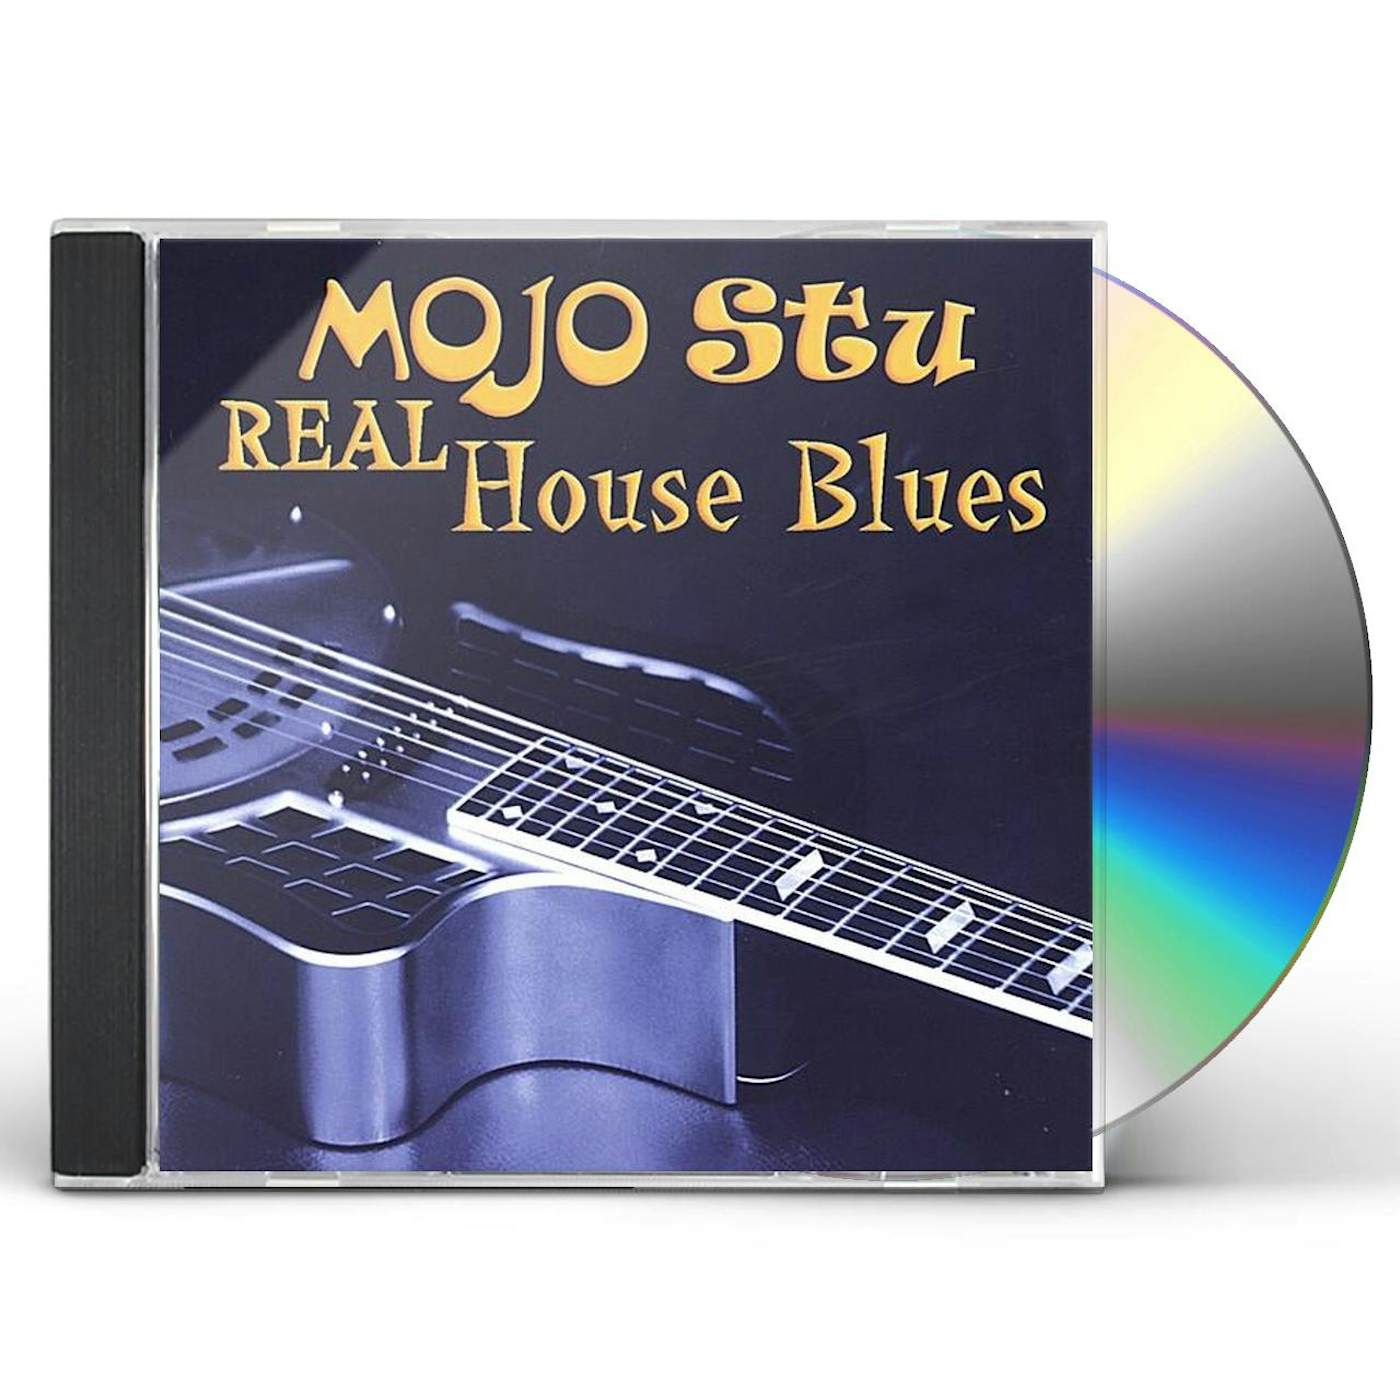 Mojo Stu REAL HOUSE BLUES CD